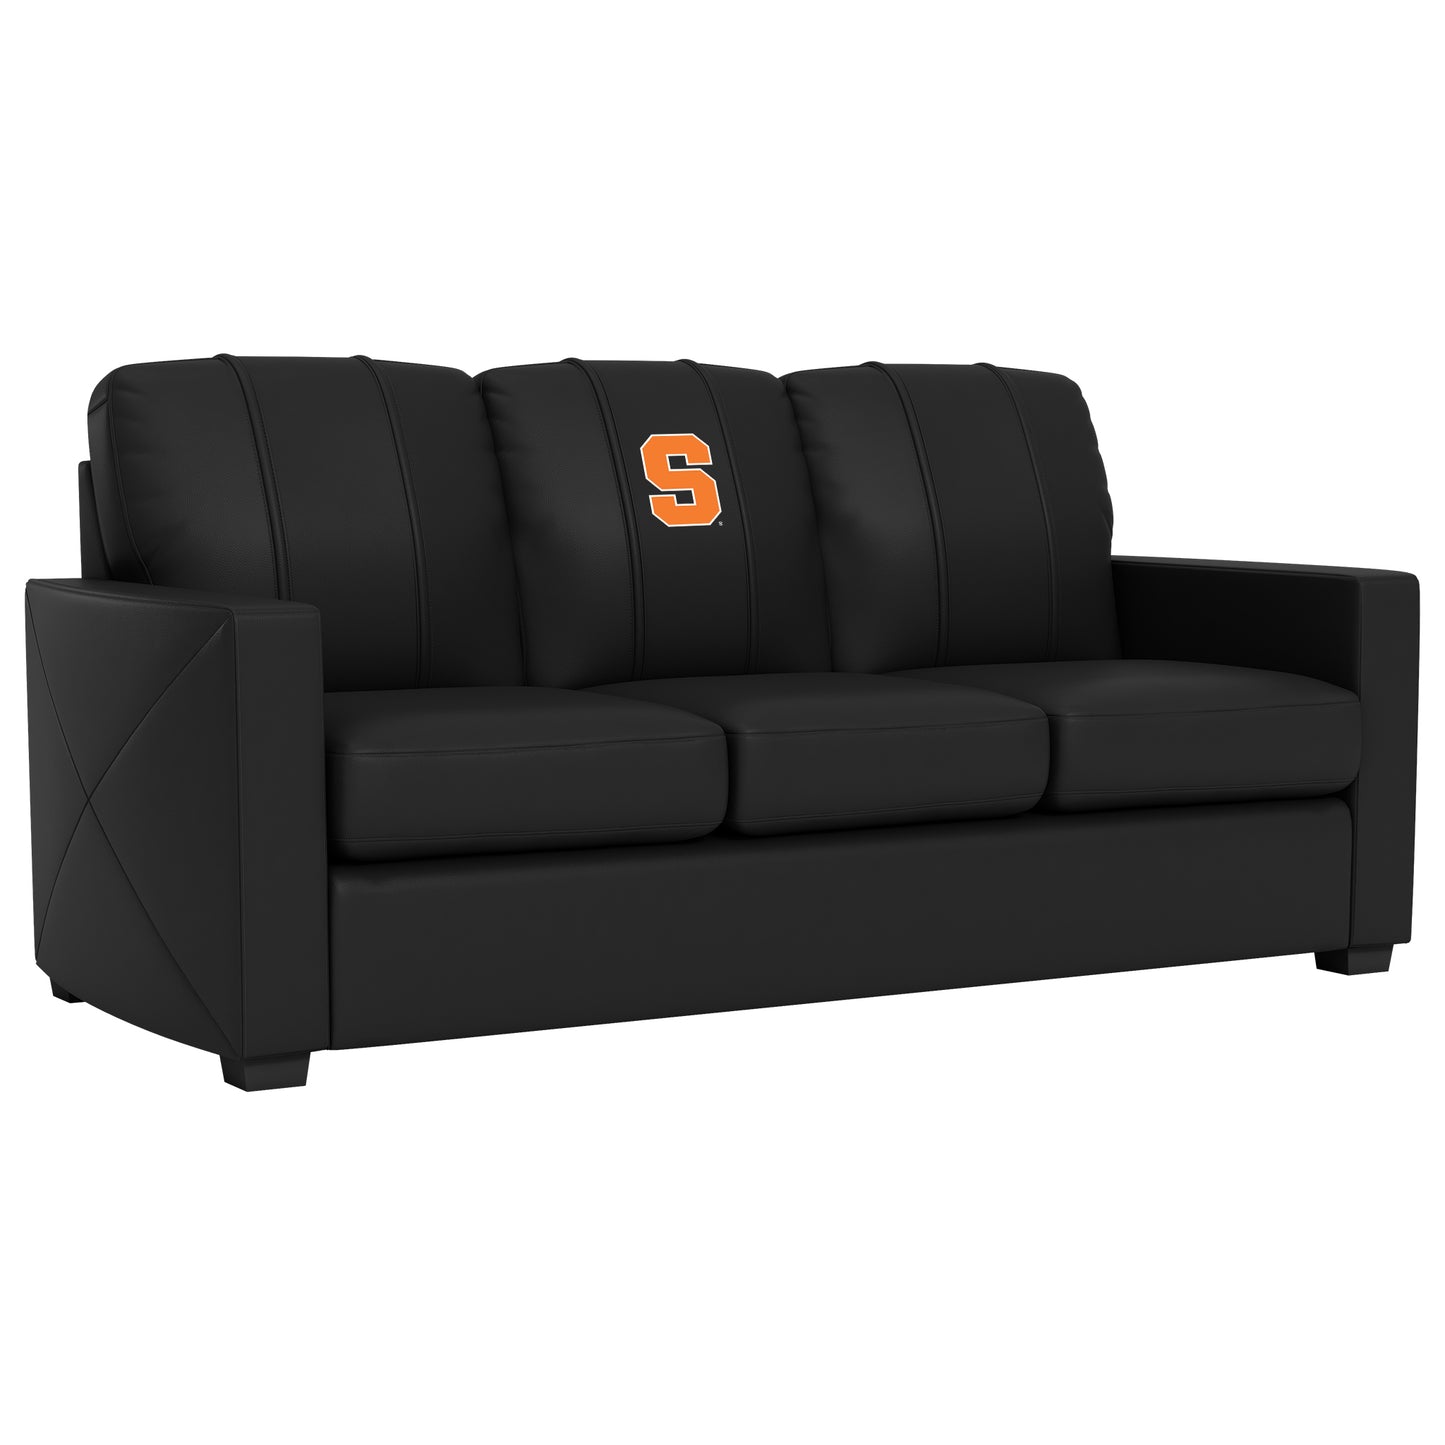 Silver Sofa with Syracuse Orange Logo